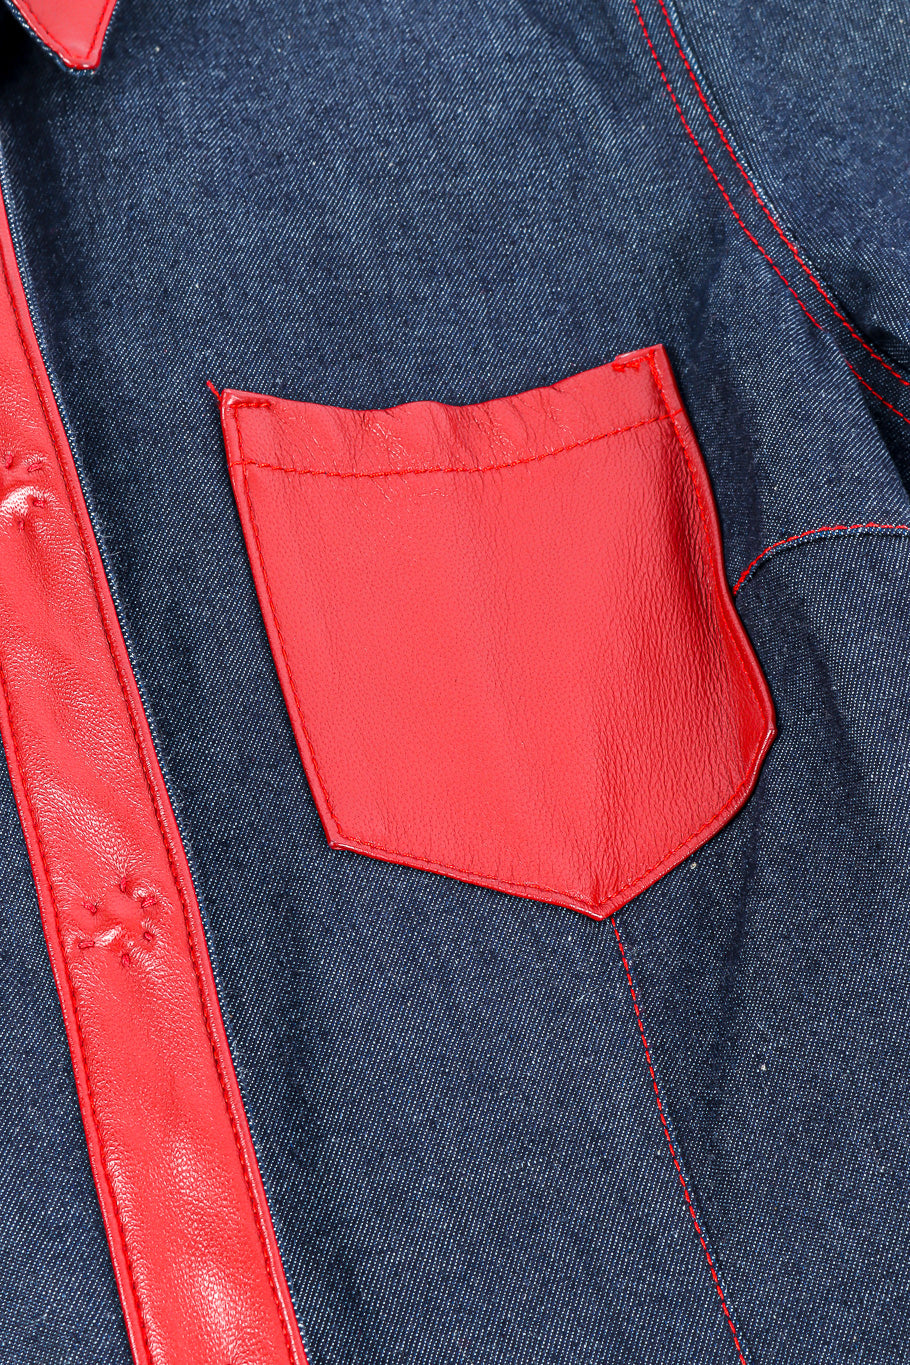 Dolce & Gabbana leather trim set pocket @recessla